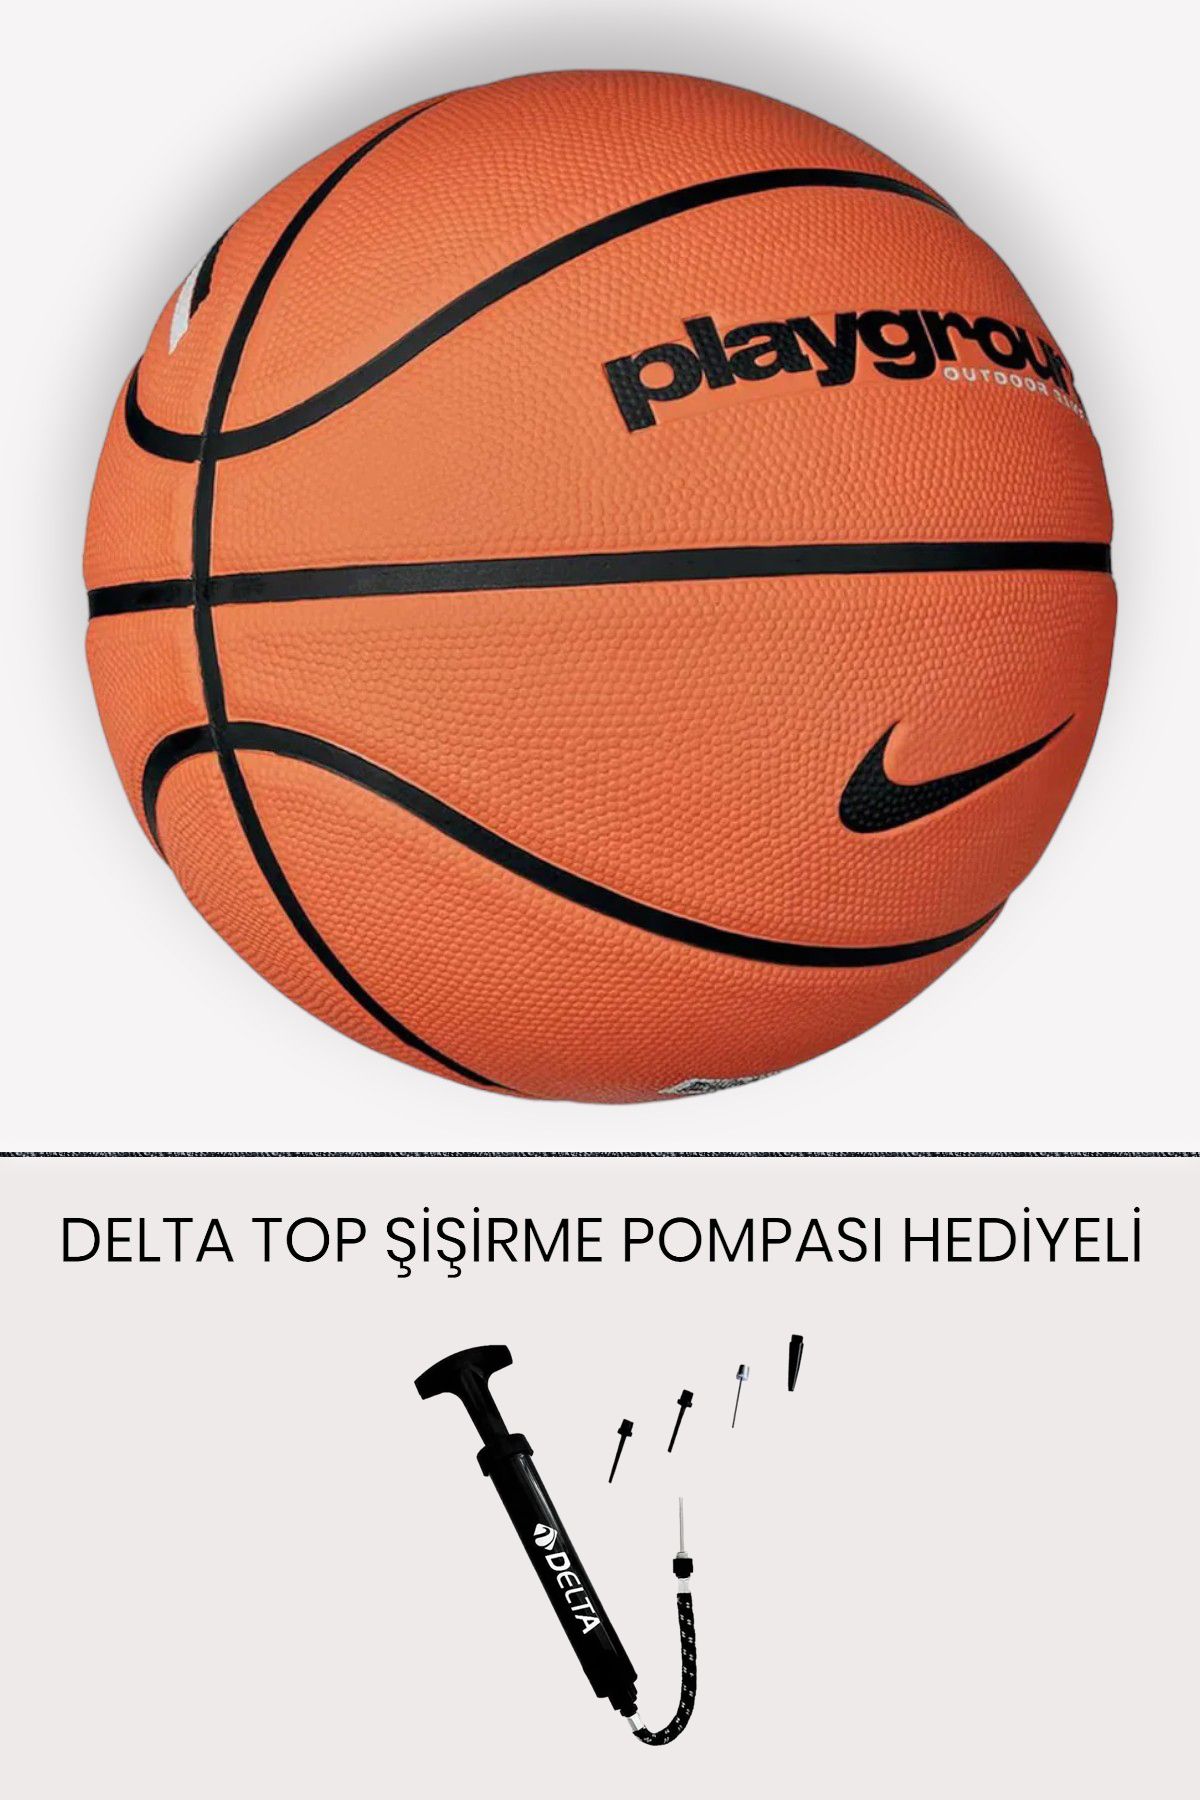 Nike Playground Kauçuk Sokak Basketbolu Topu - Hediyeli